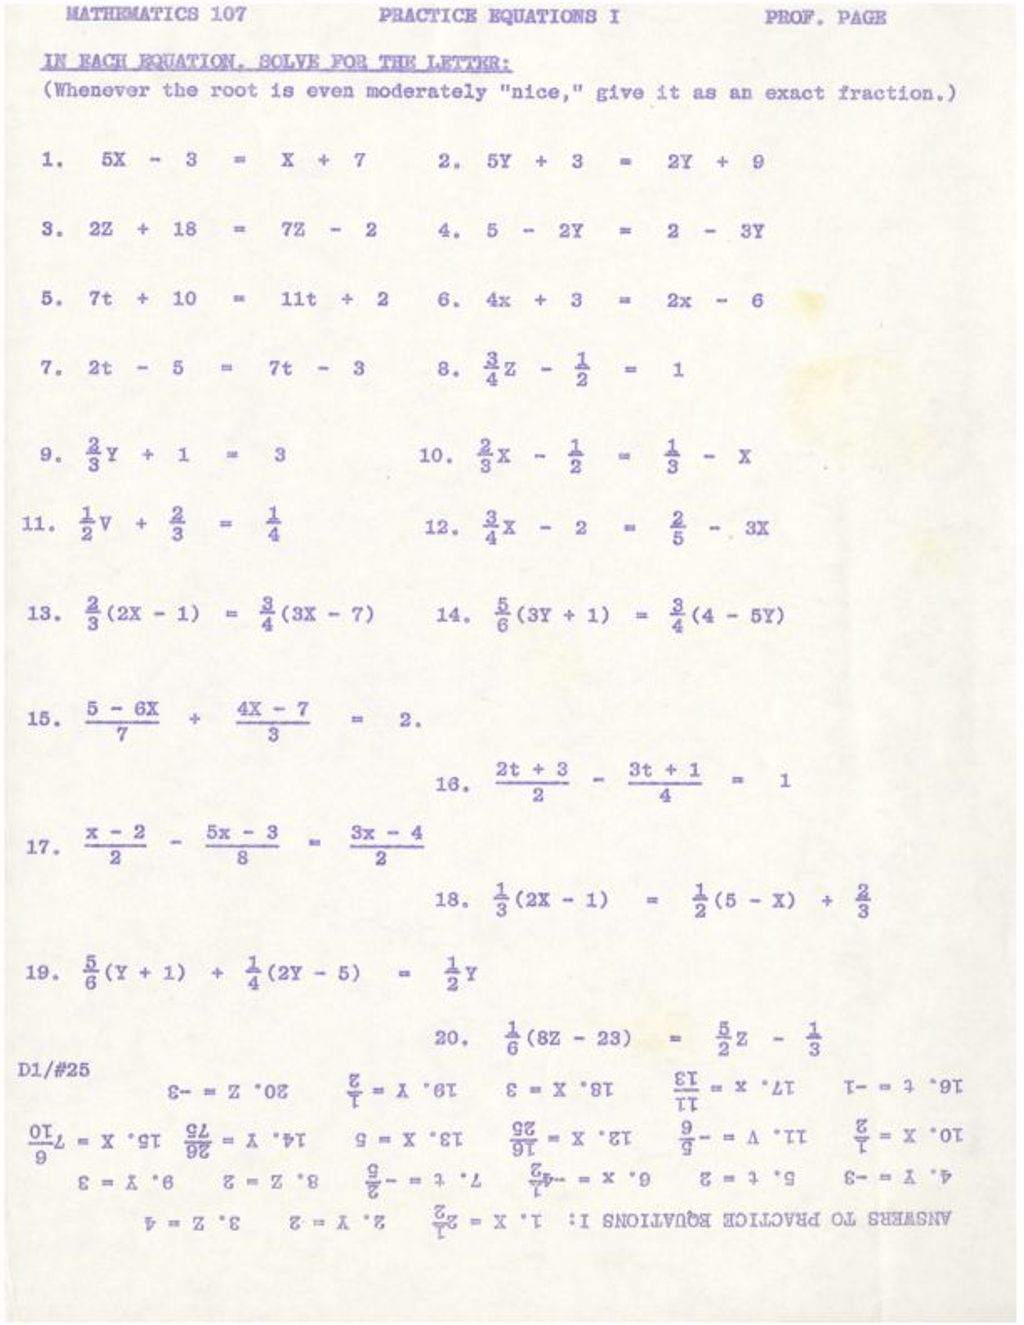 Miniature of Mathematics 107 Practice Equations I copy